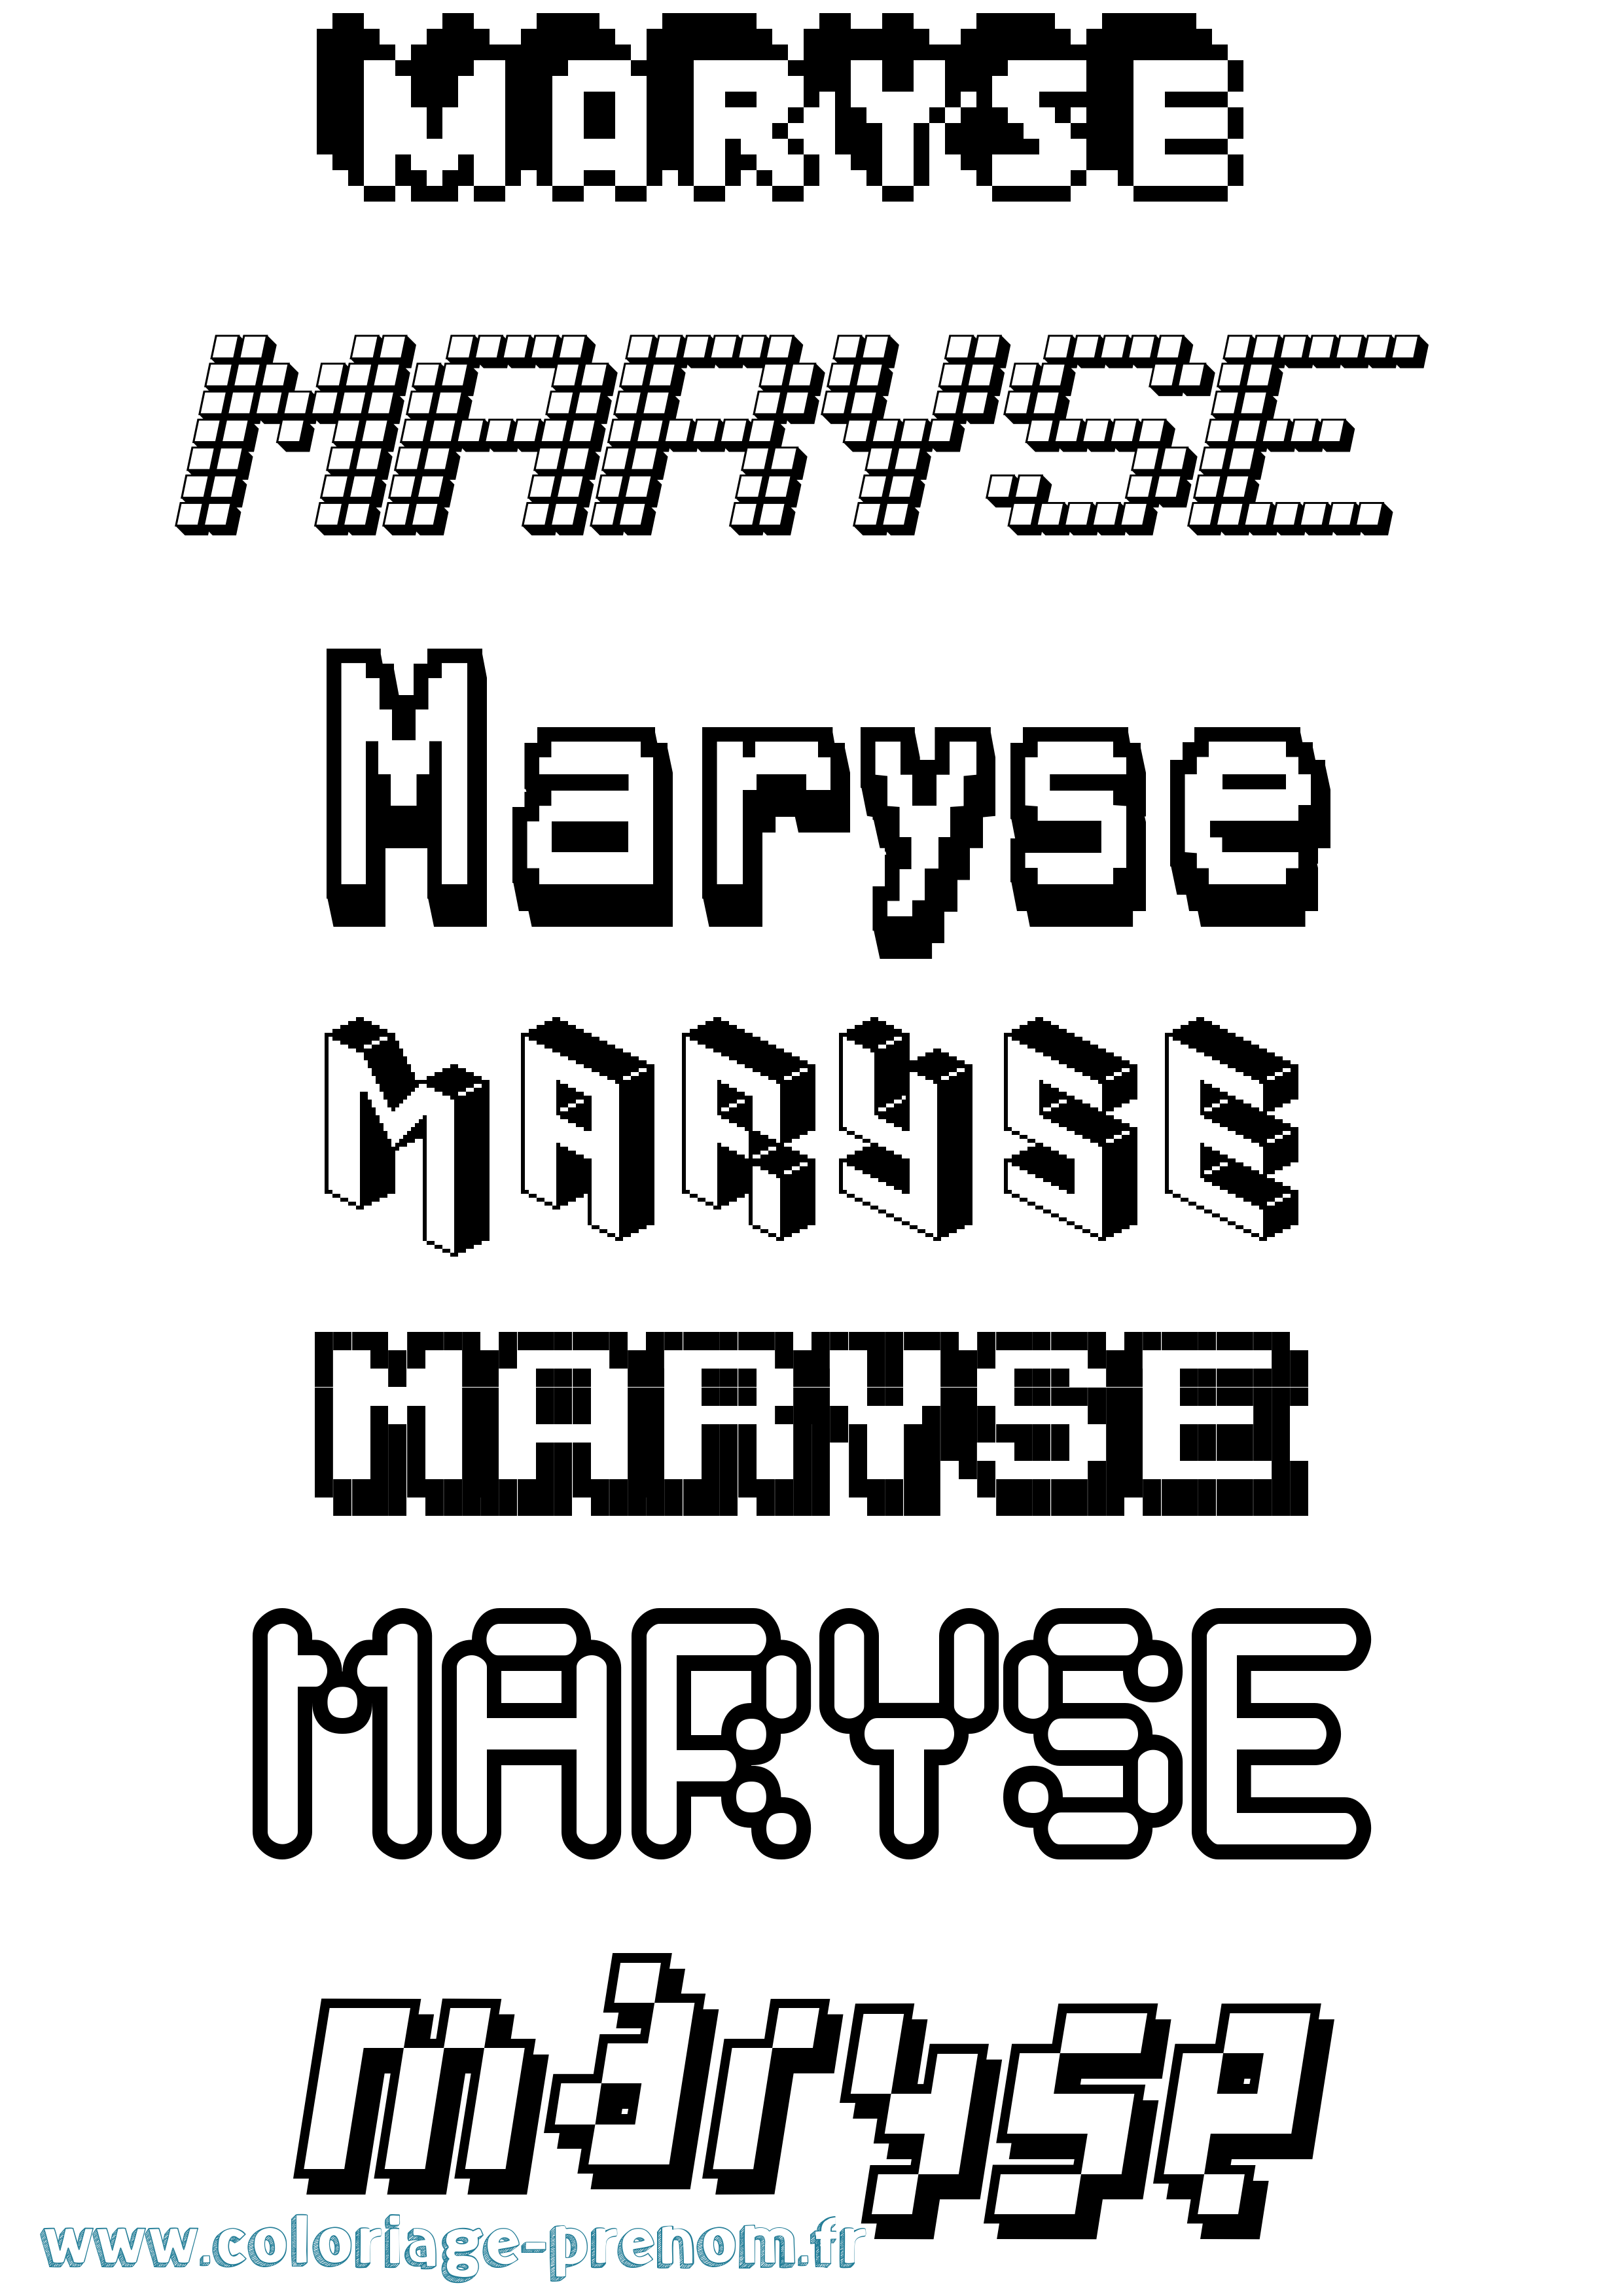 Coloriage prénom Maryse Pixel